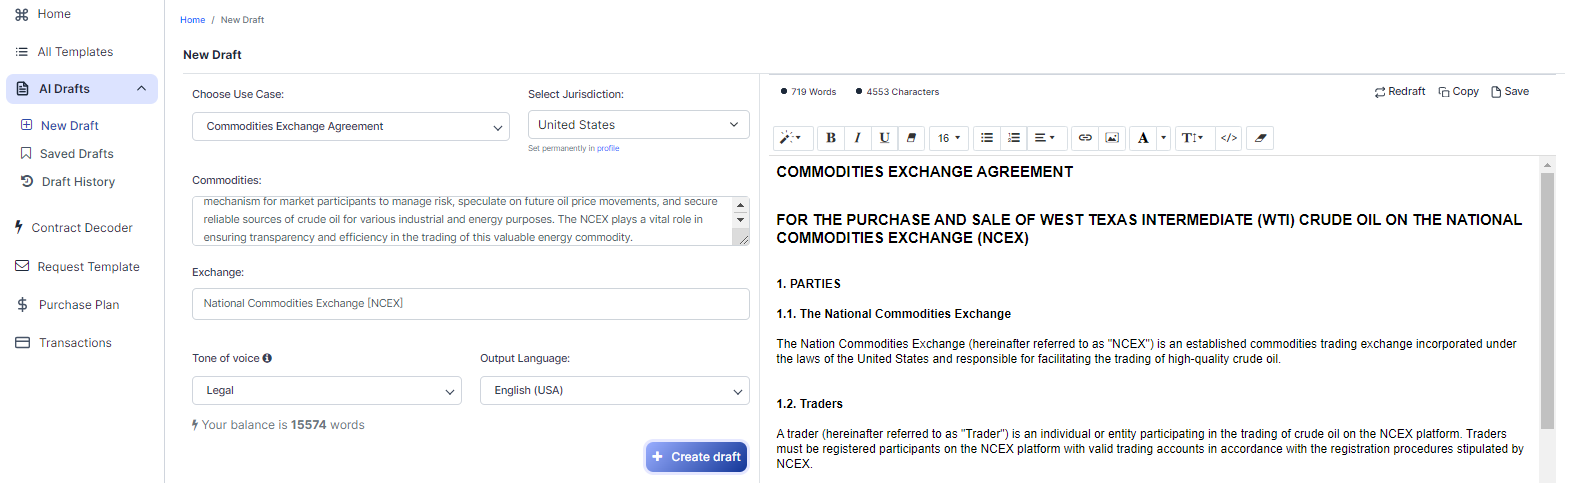 Commodities Exchange Agreement template